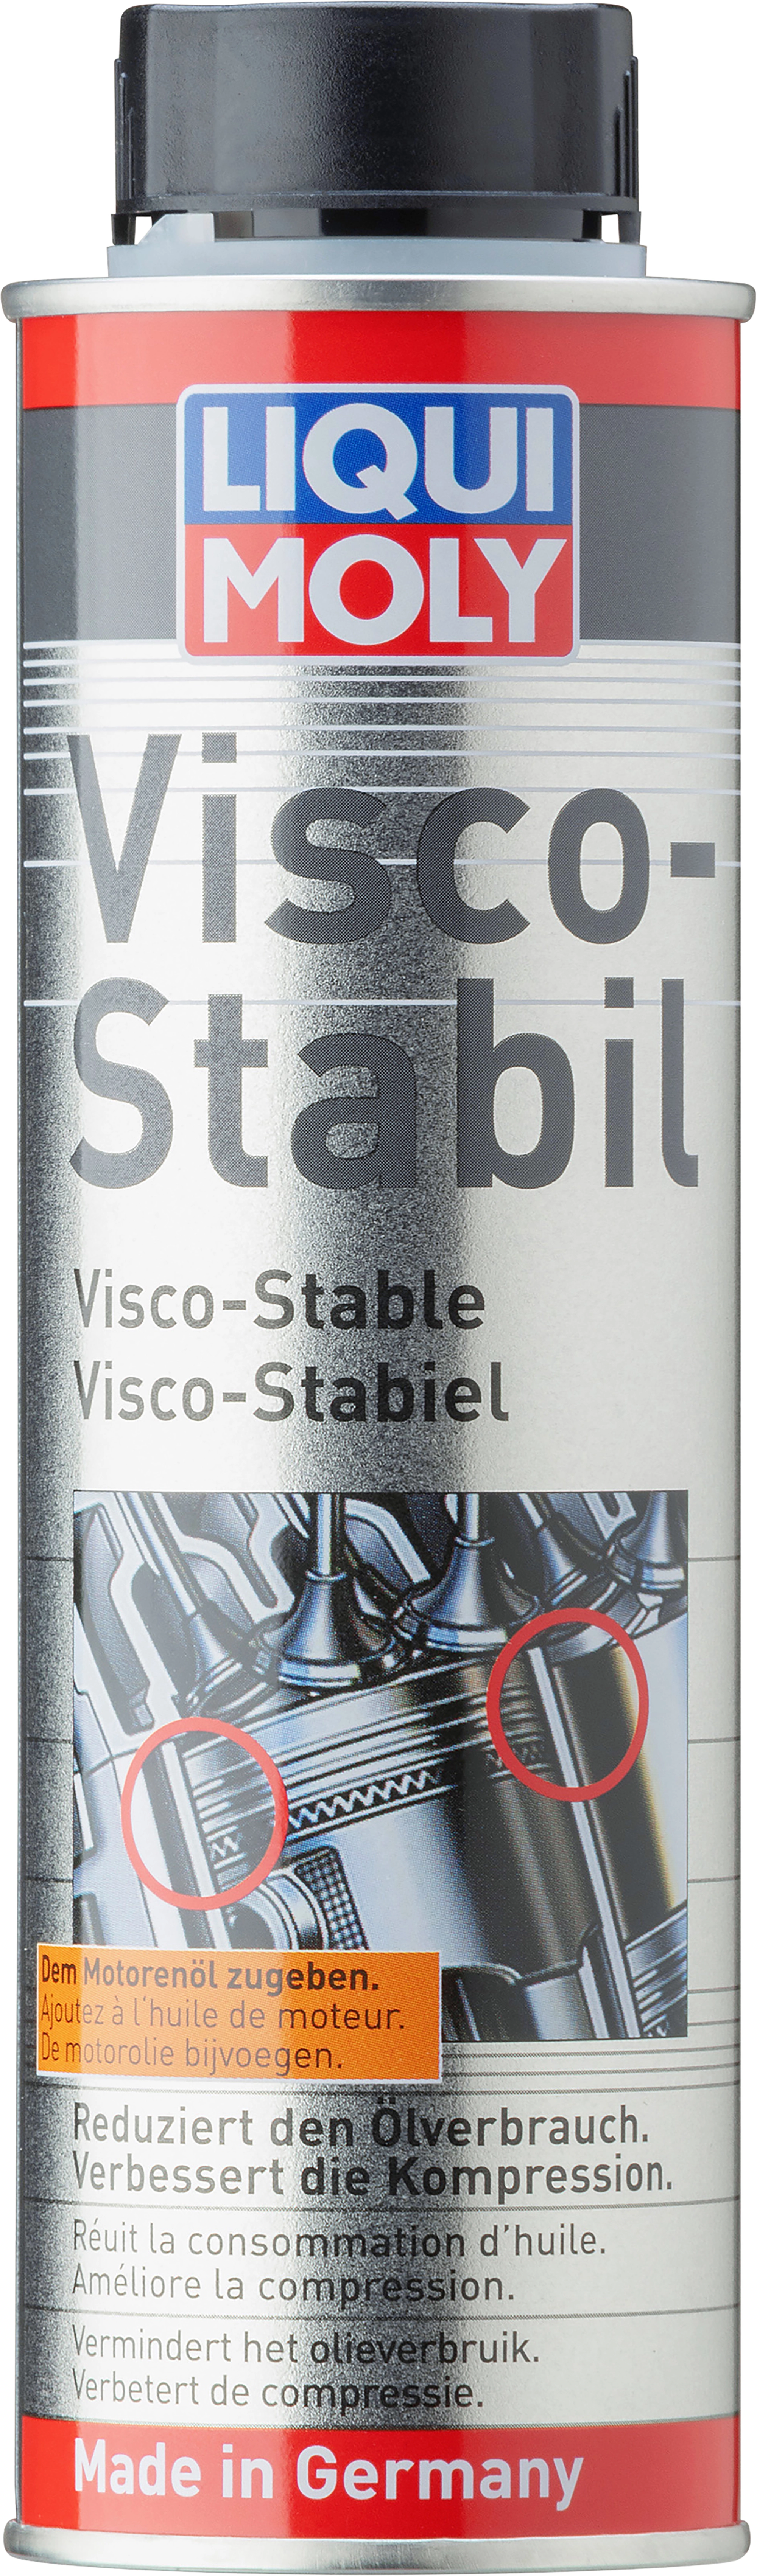 Liqui Moly Visco-Stabil 300 ml kaufen bei OBI